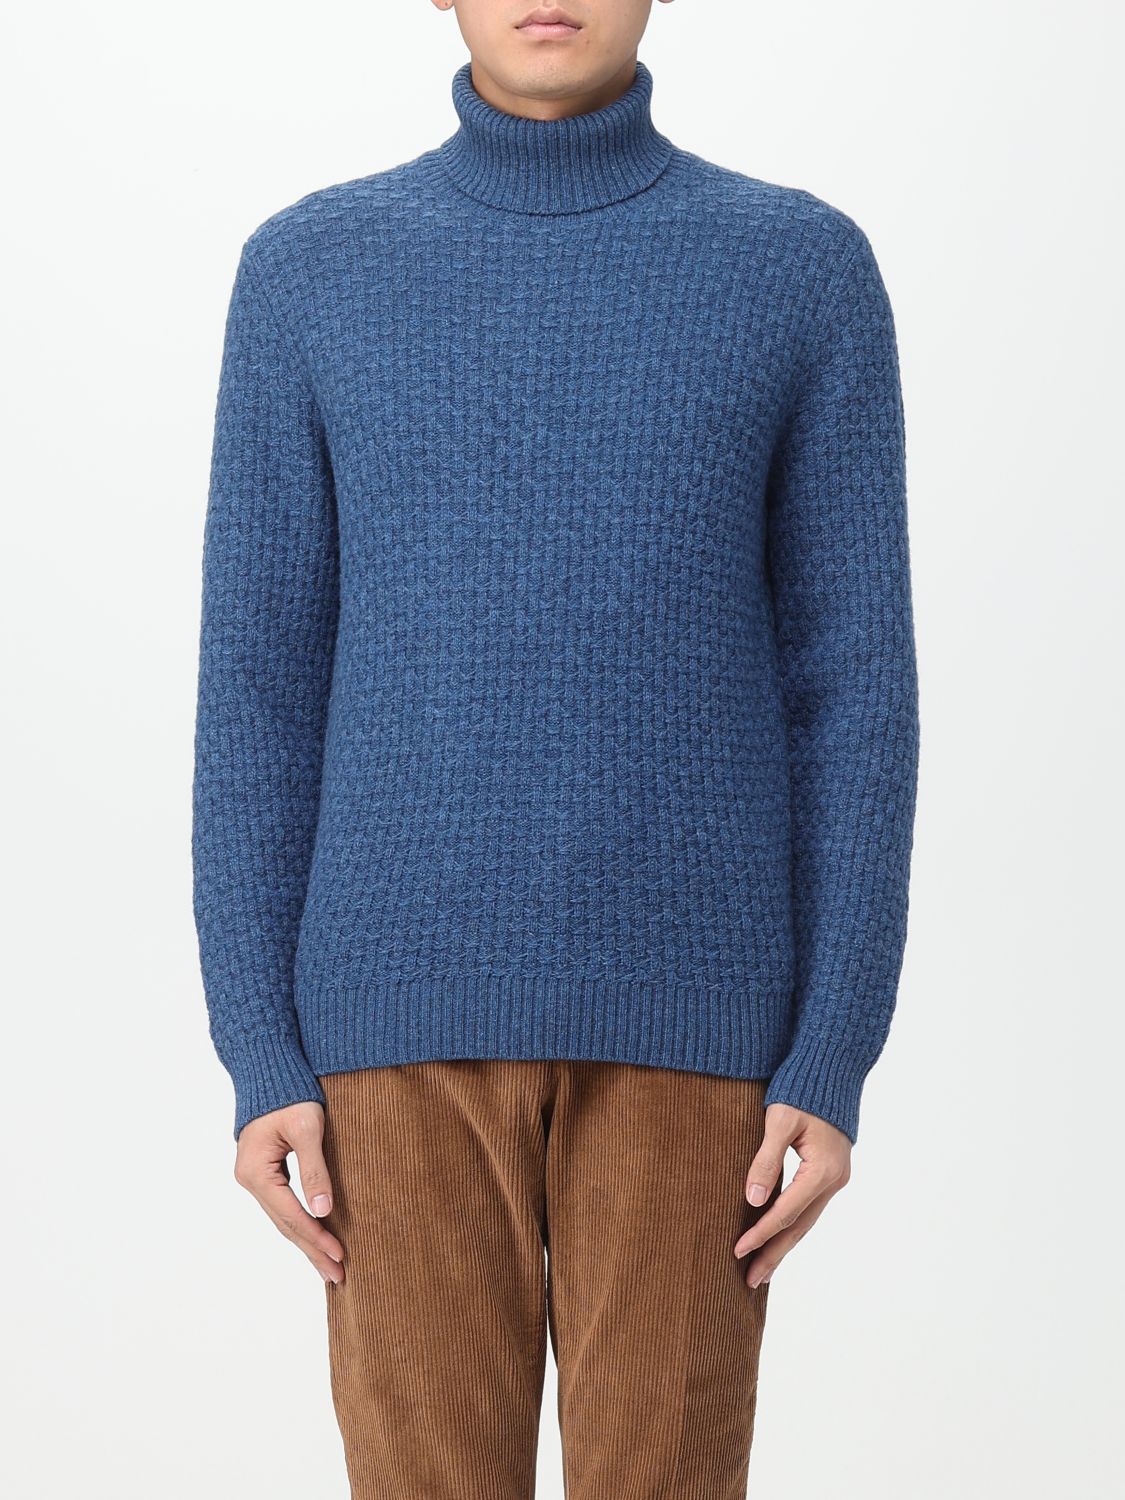 ZANONE: sweater for man - Teal | Zanone sweater 813068ZN208 online